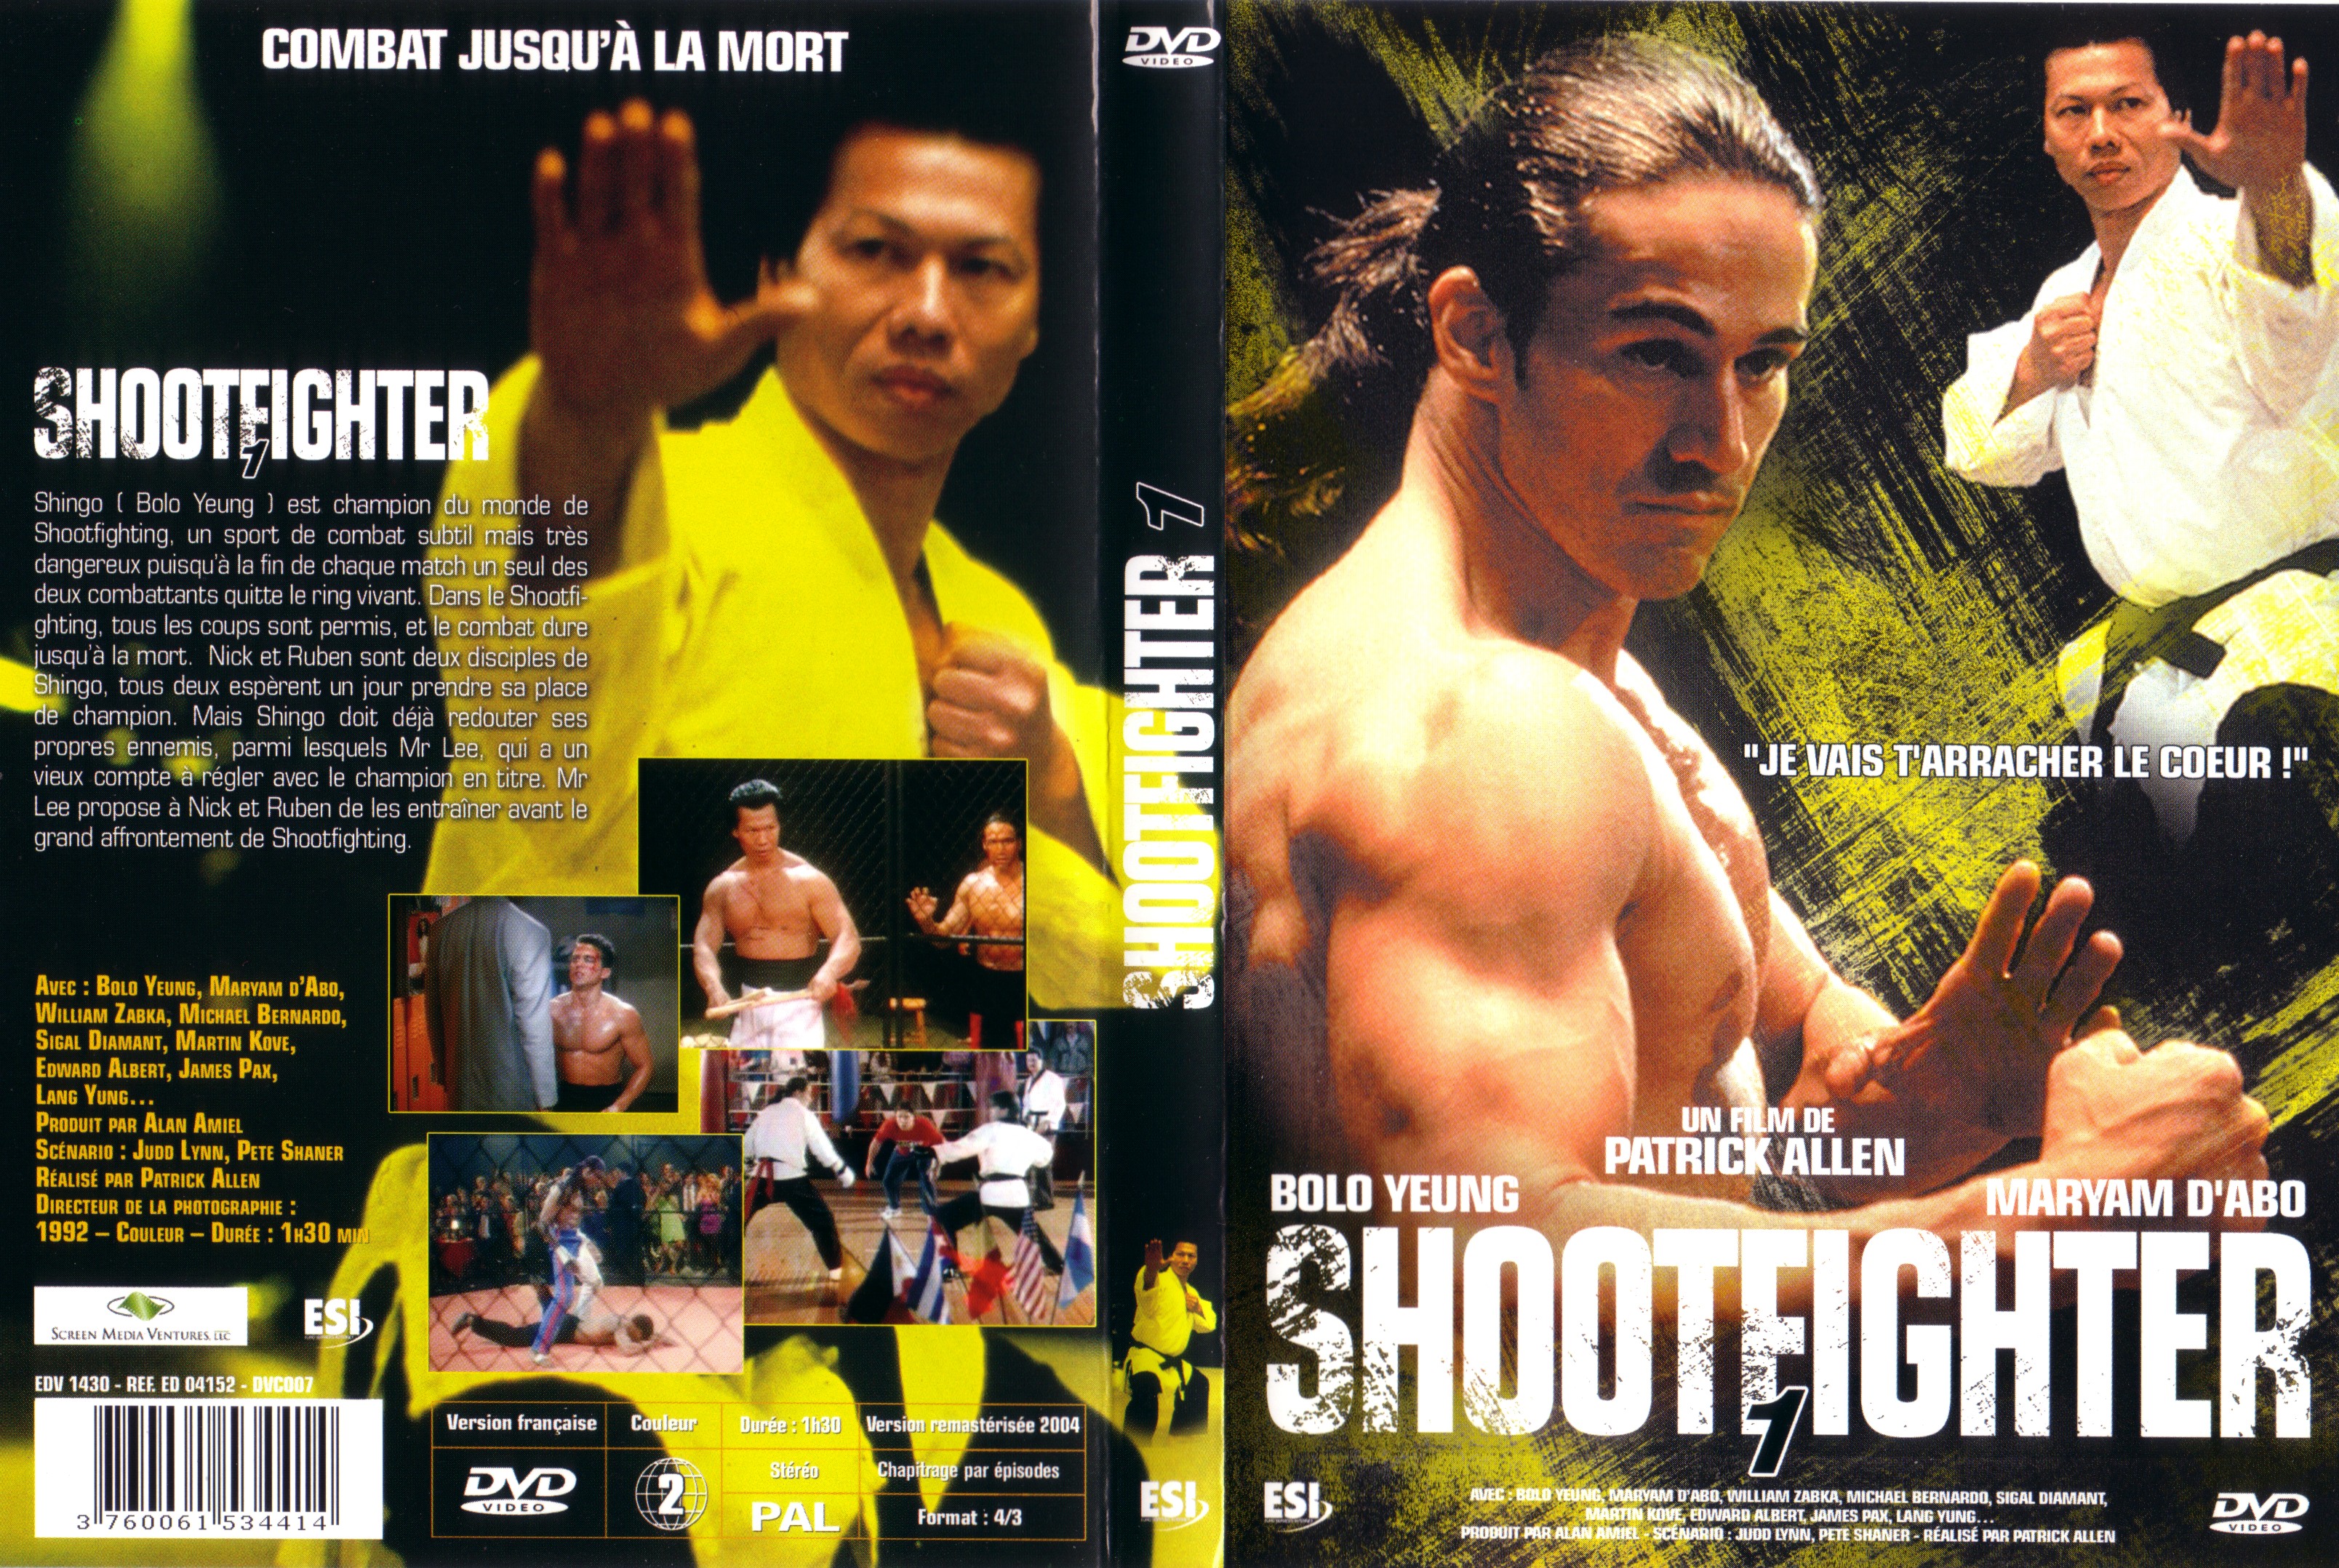 Jaquette DVD Shootfighter